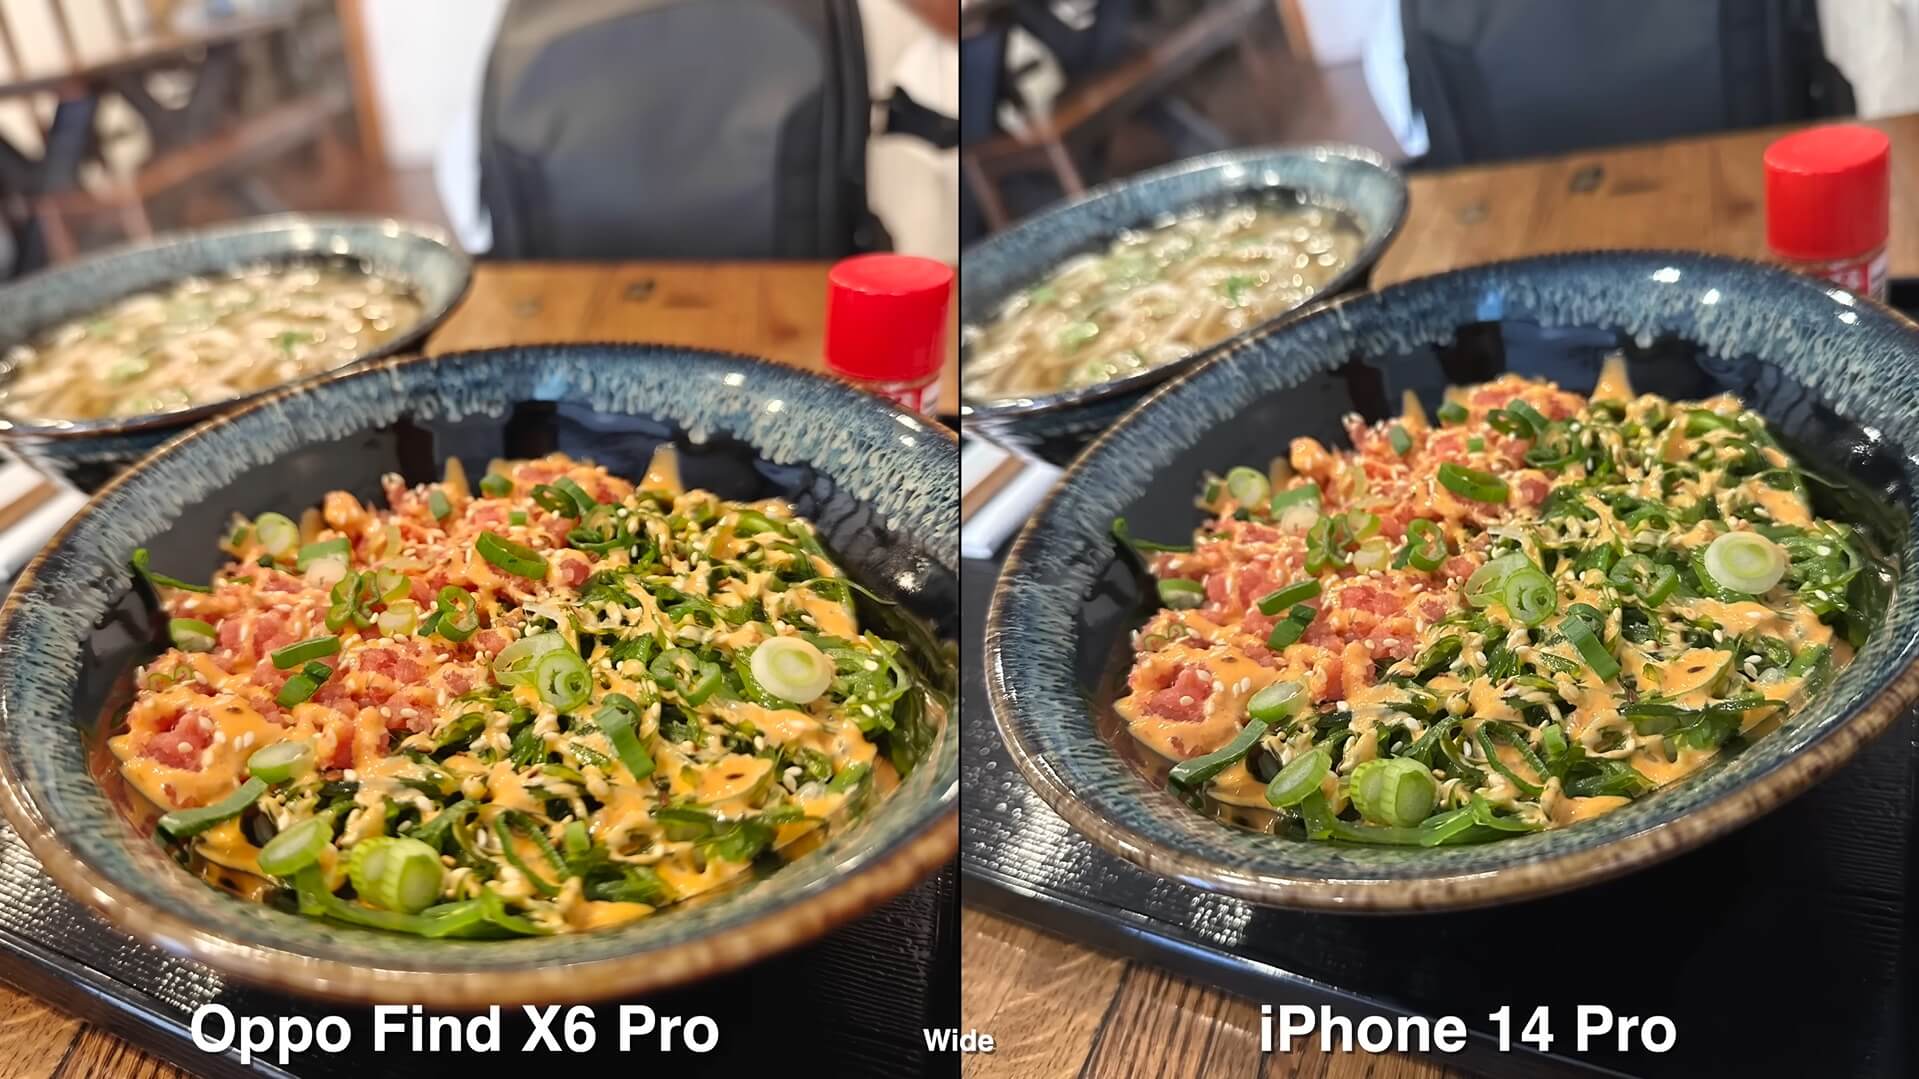 OPPO Find X6 Pro сравнили с iPhone 14 Pro по качеству фото и видео